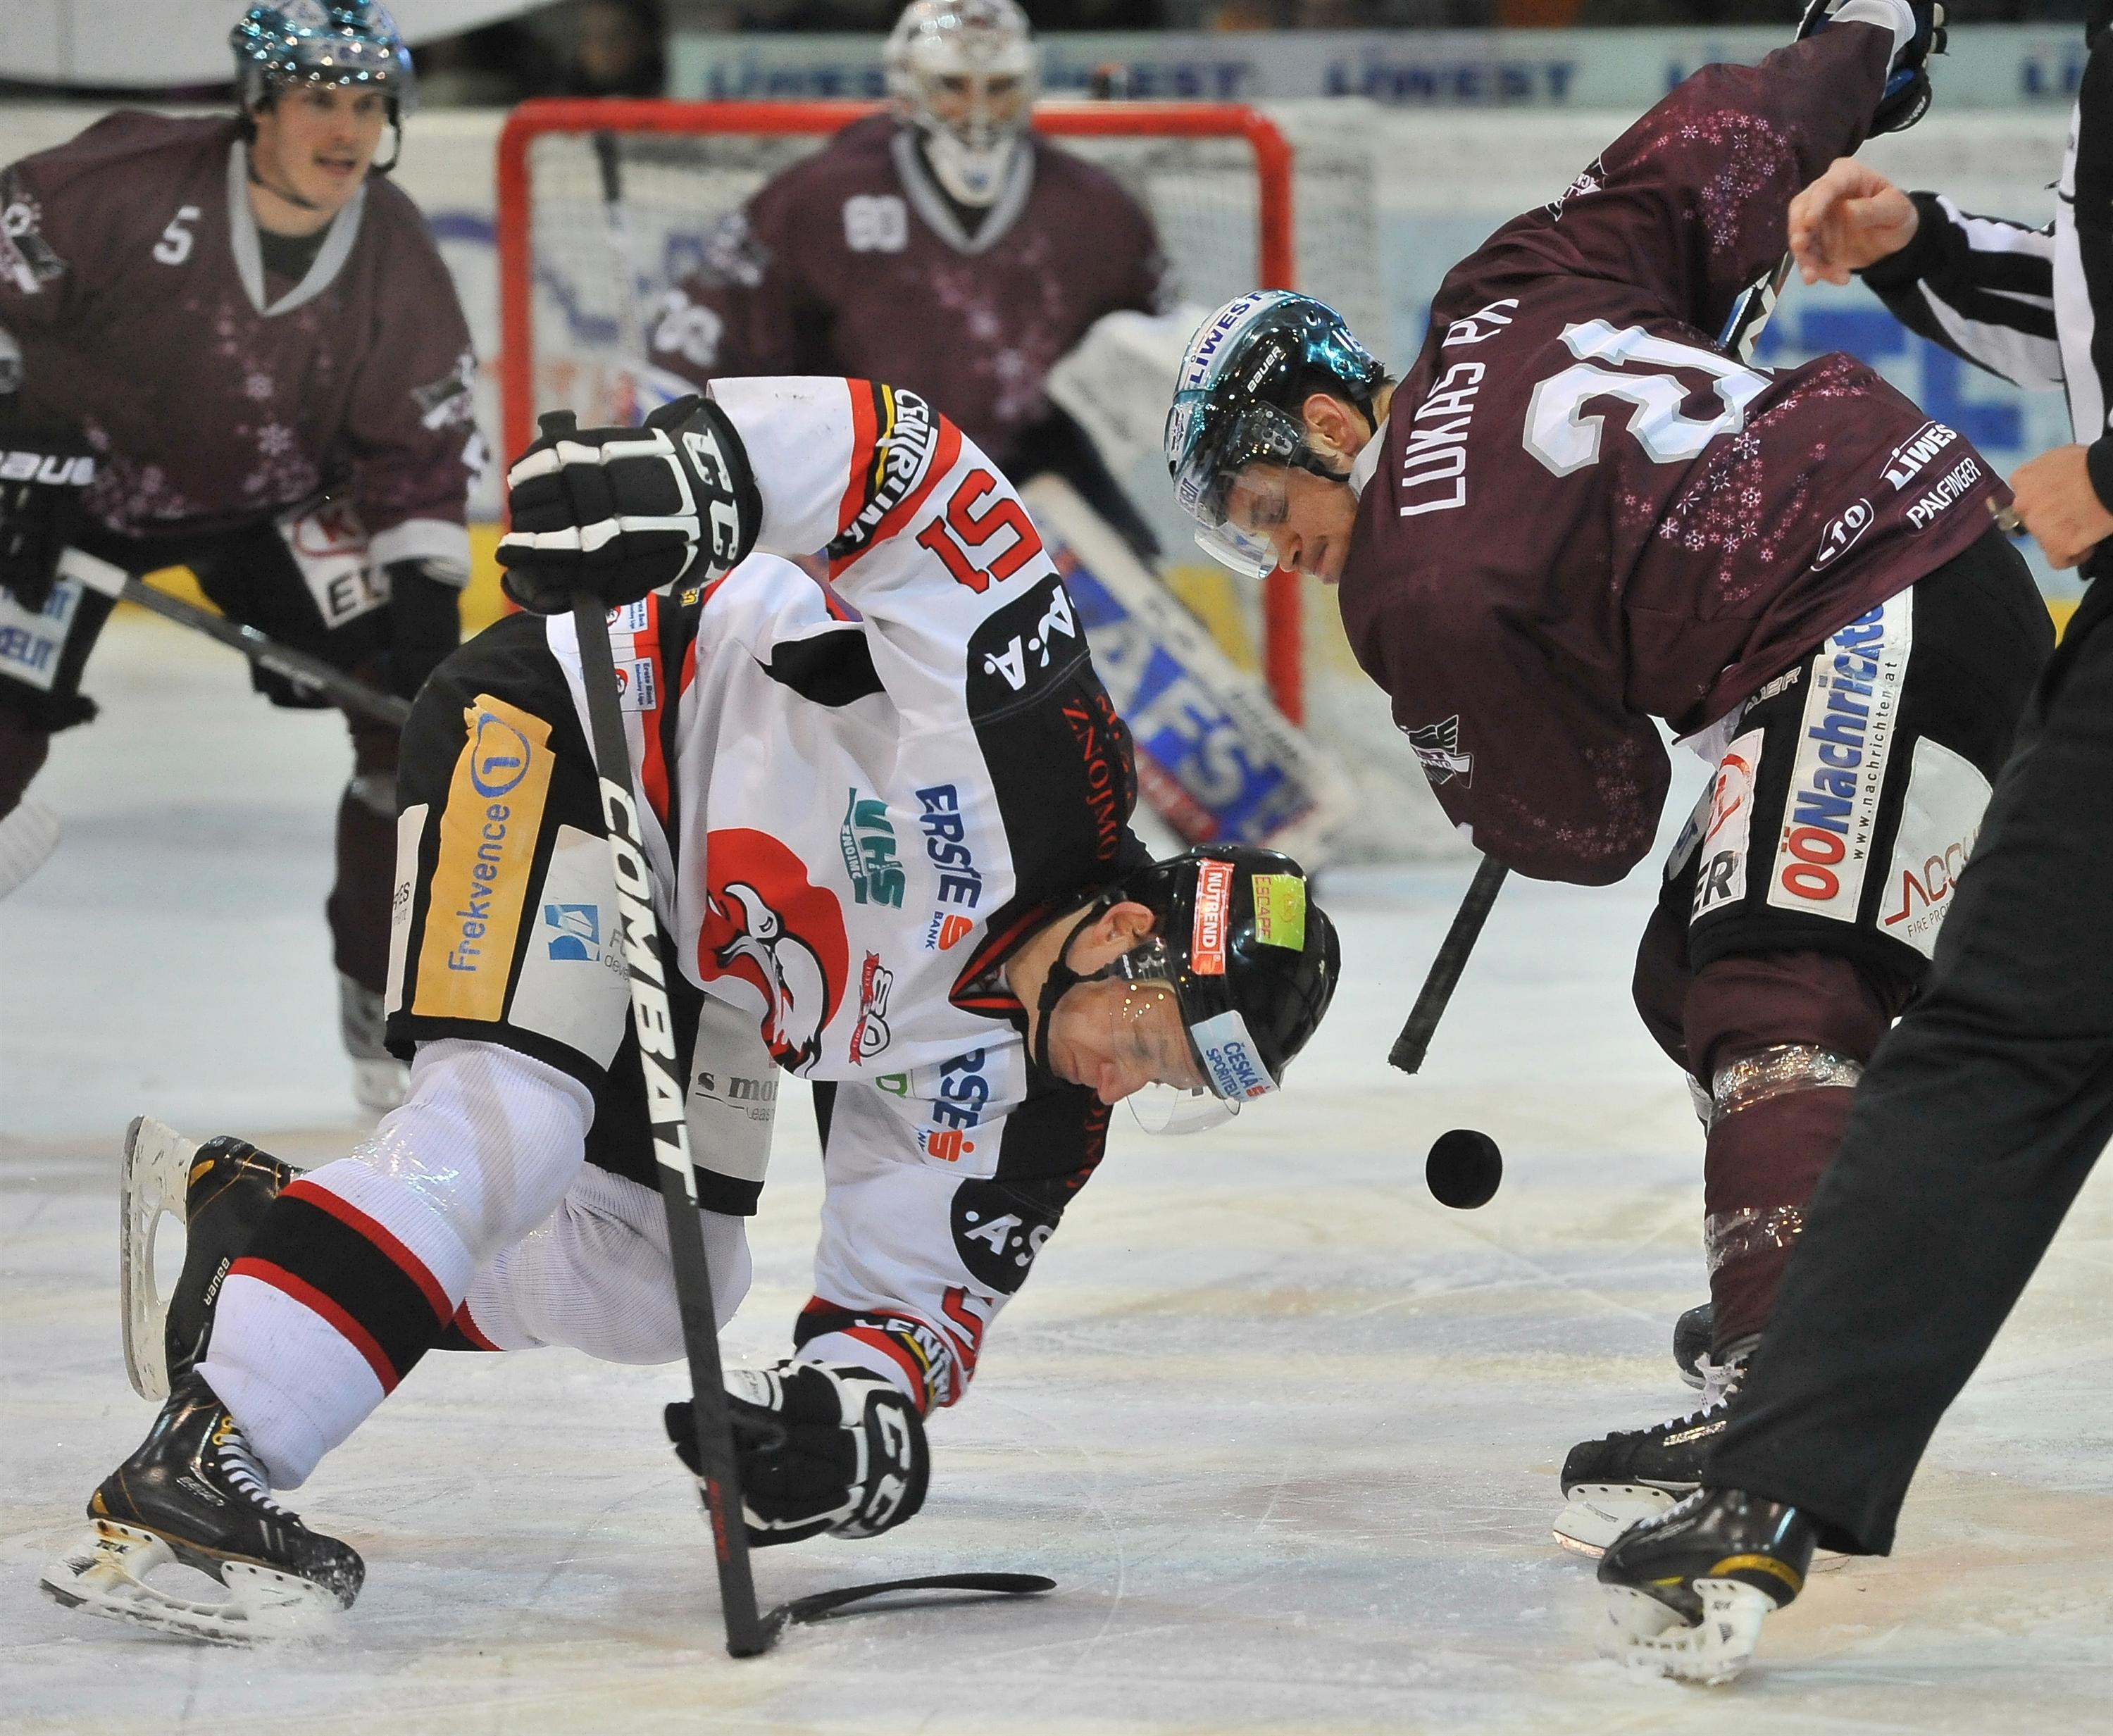 Eishockey-Black-Wings-Linz-vs-HC-Orli-Znojmo-23.12.2012-Philipp-Lukas-vs-Jan-Seda2